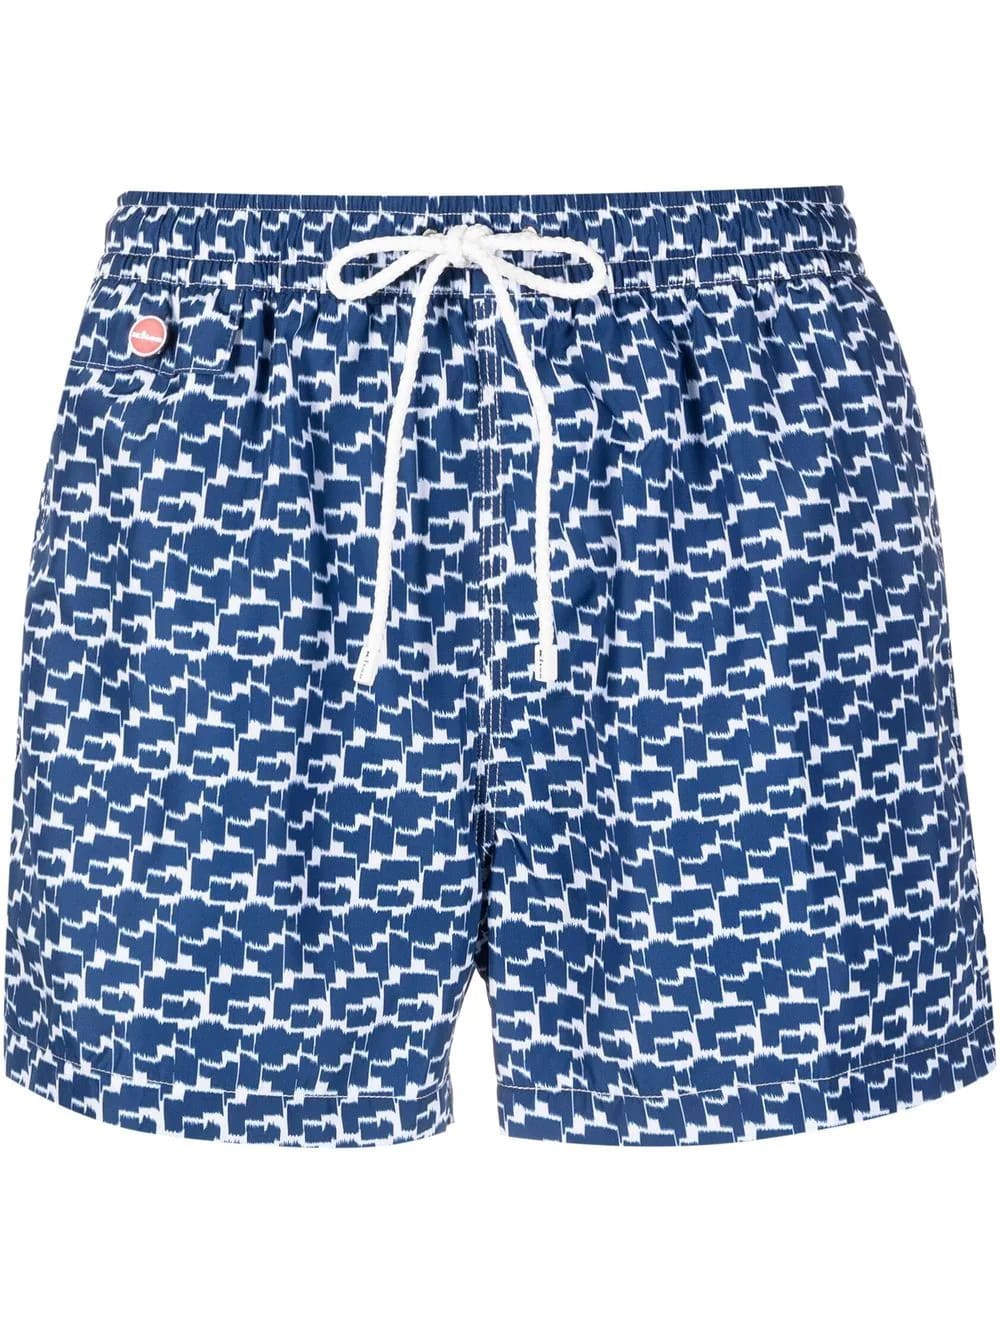 Kiton Navy Blue Swim Shorts With White Abstract Print